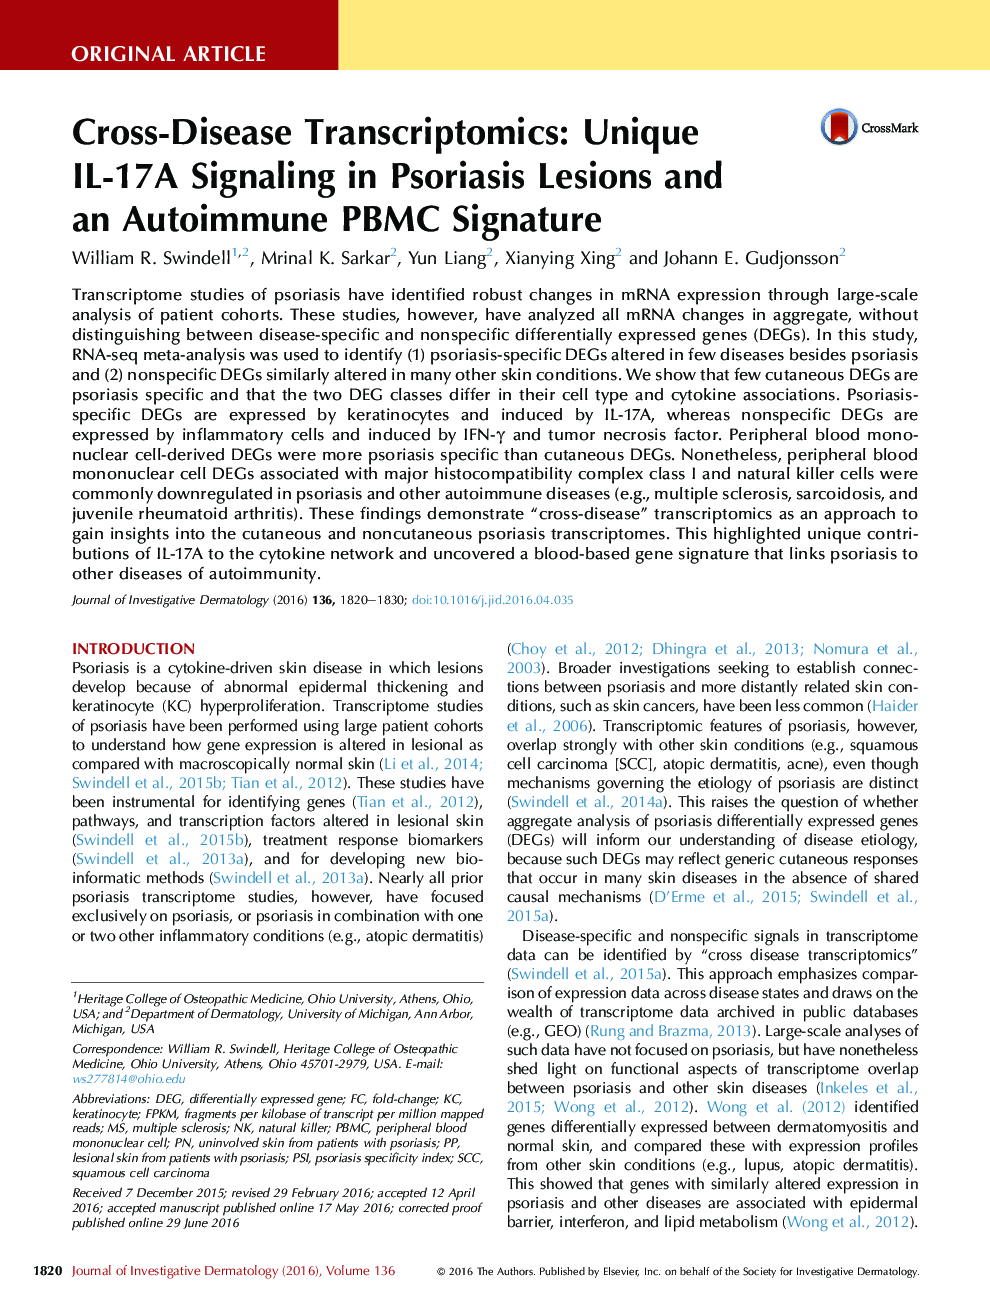 Cross-Disease Transcriptomics: Unique IL-17A Signaling in Psoriasis Lesions and an Autoimmune PBMC Signature